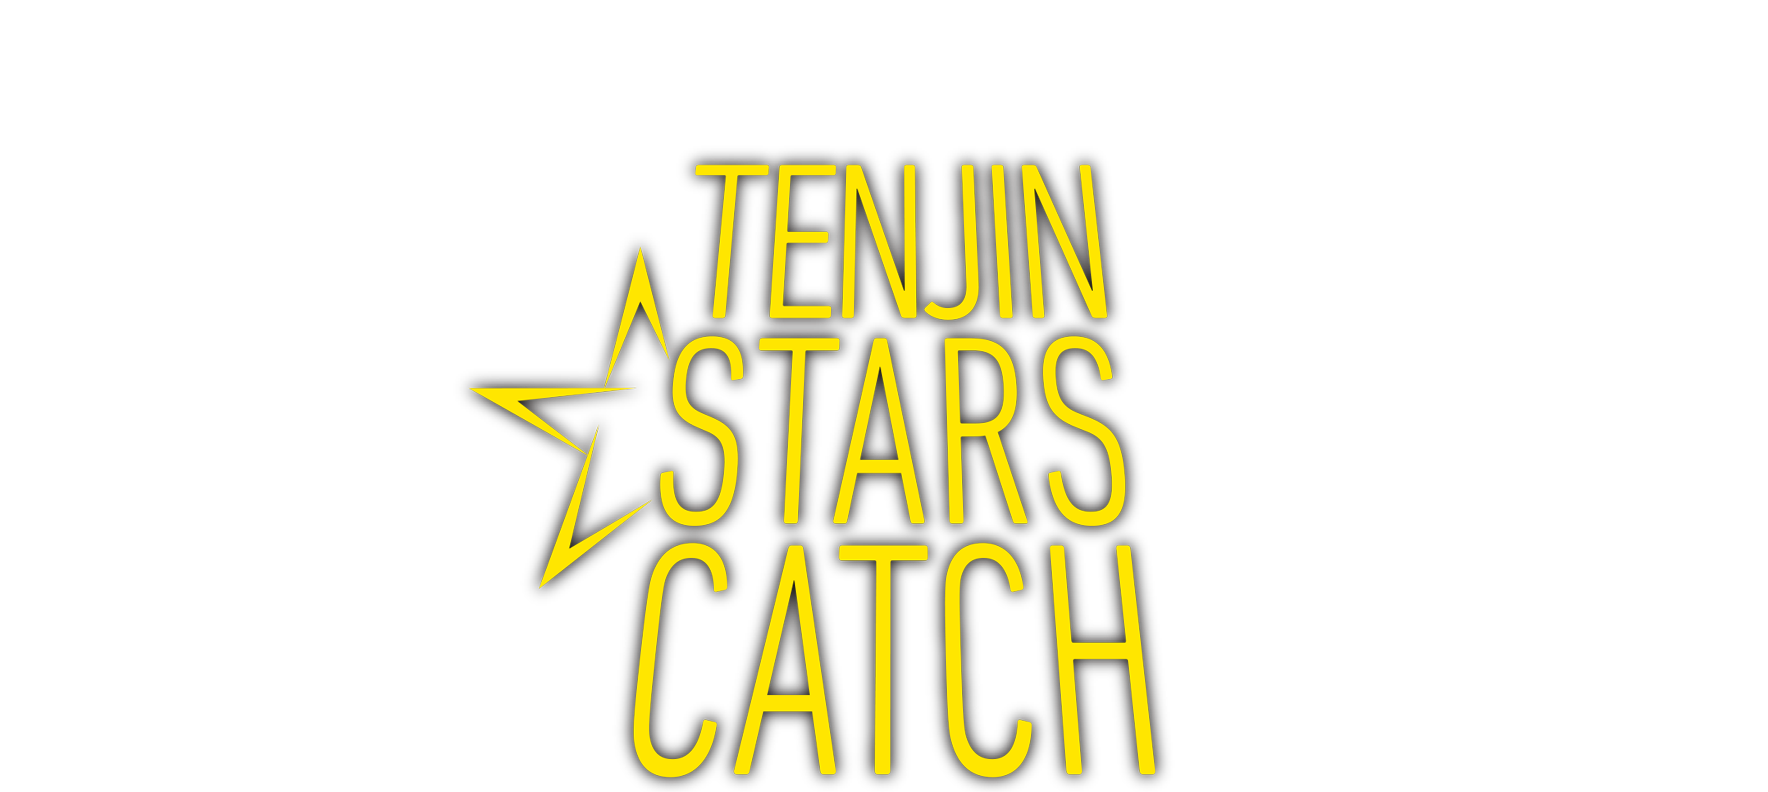 TENJIN STARS CATCH